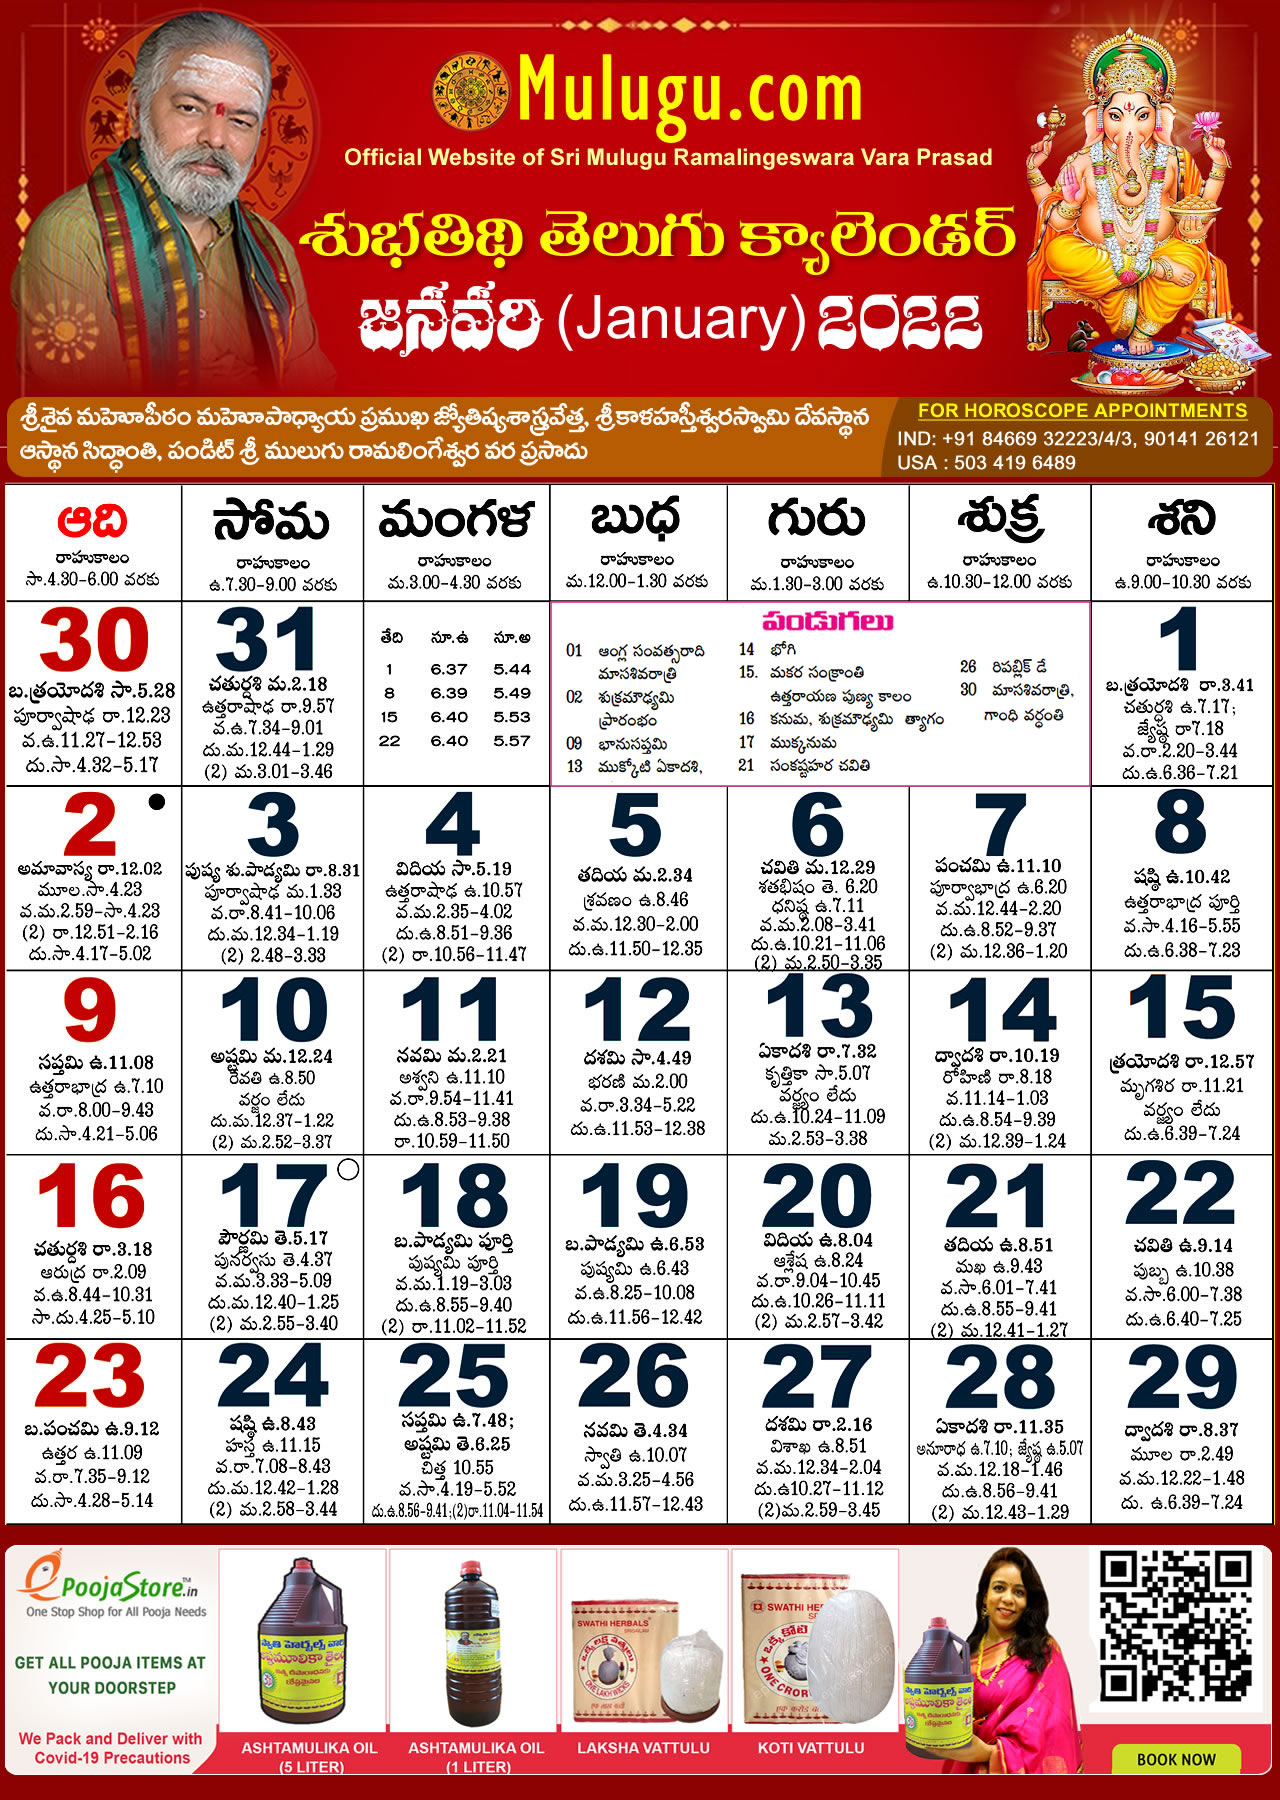 Telugu Calendar 2022 Usa Mulugu Subhathidi January Telugu Calendar 2022 | Telugu Calendar 2022 - 2023 |  Telugu Subhathidi Calendar 2022 | Calendar 2022 | Telugu Calendar 2022 |  Subhathidi Calendar 2022 - Chicago Calendar 2022 Los